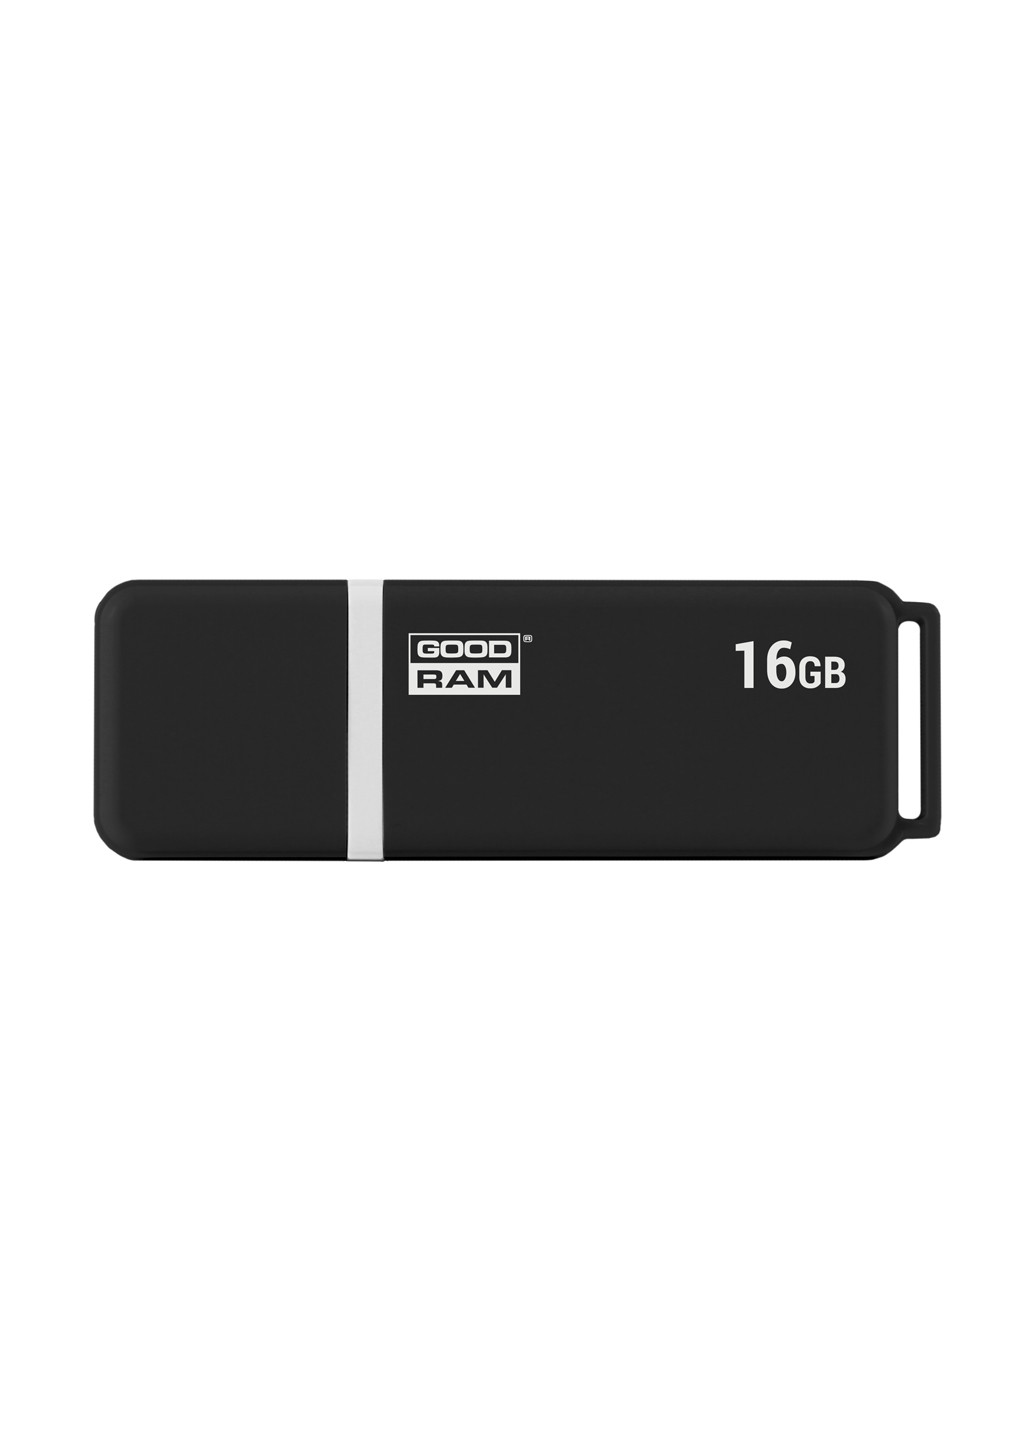 Флеш память USB UMO2 16GB Graphite (UMO2-0160E0R11) Goodram флеш память usb goodram umo2 16gb graphite (umo2-0160e0r11) (134201767)